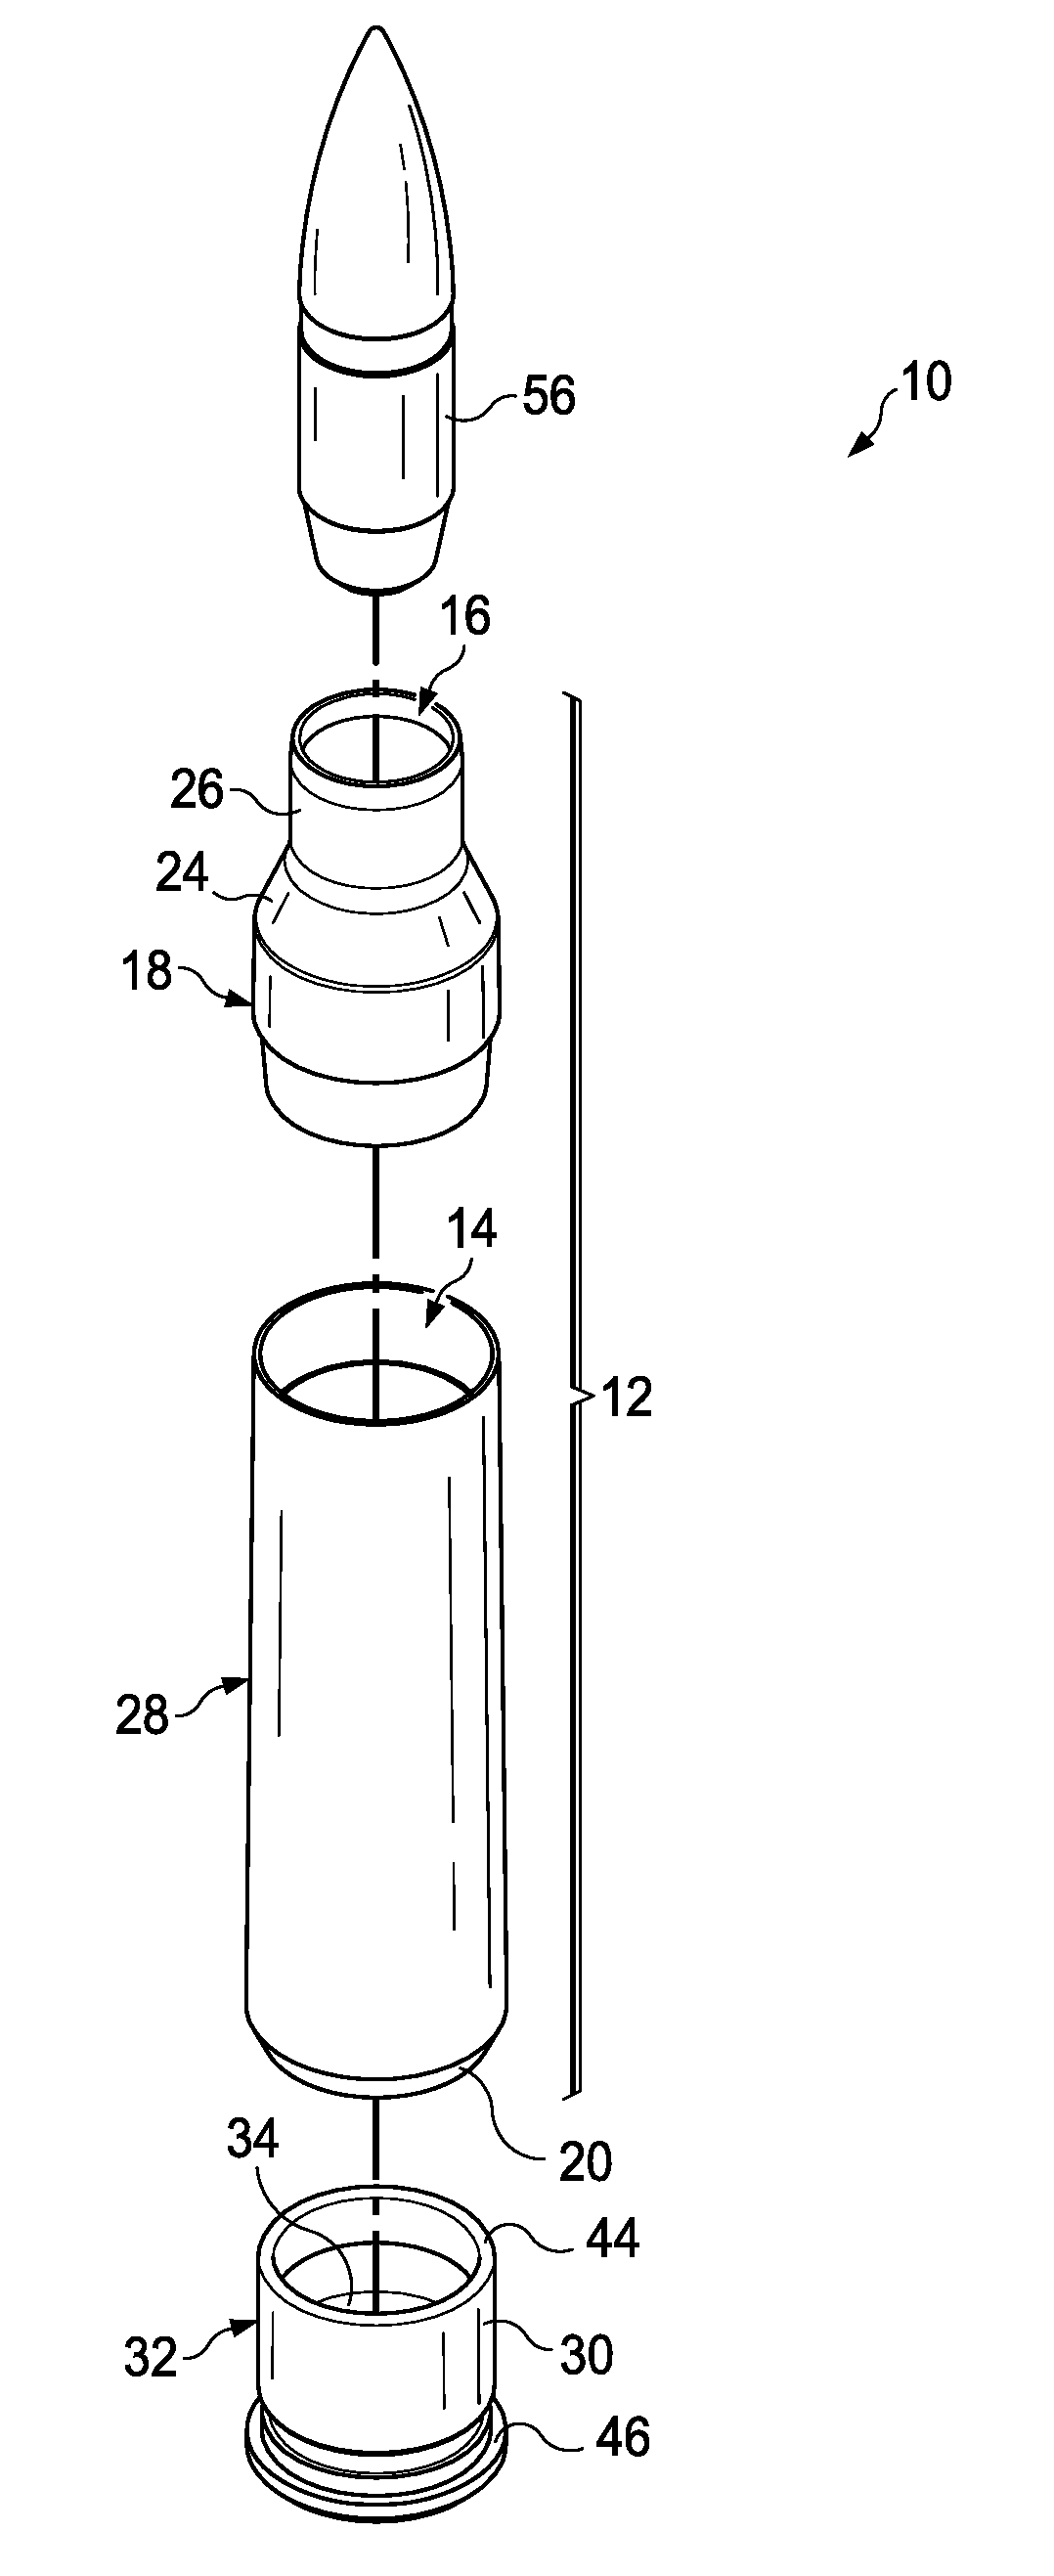 Polymer ammunition cartridge having a metal injection molded primer insert